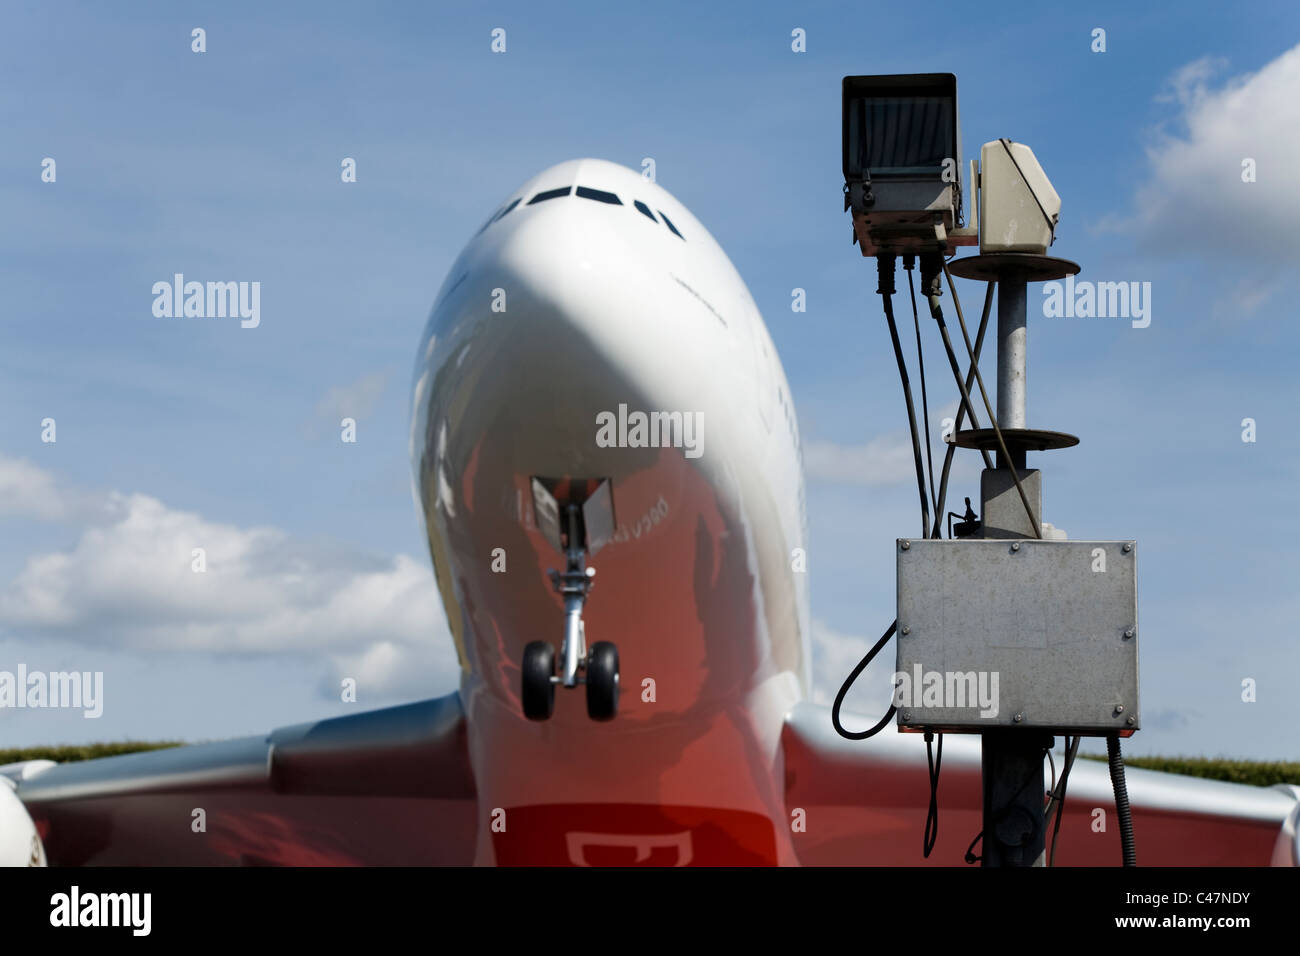 Security traffic camera / CCTV surveillance cameras / near the Emirates Airbus A380 model aircraft at London Heathrow airport UK Stock Photo